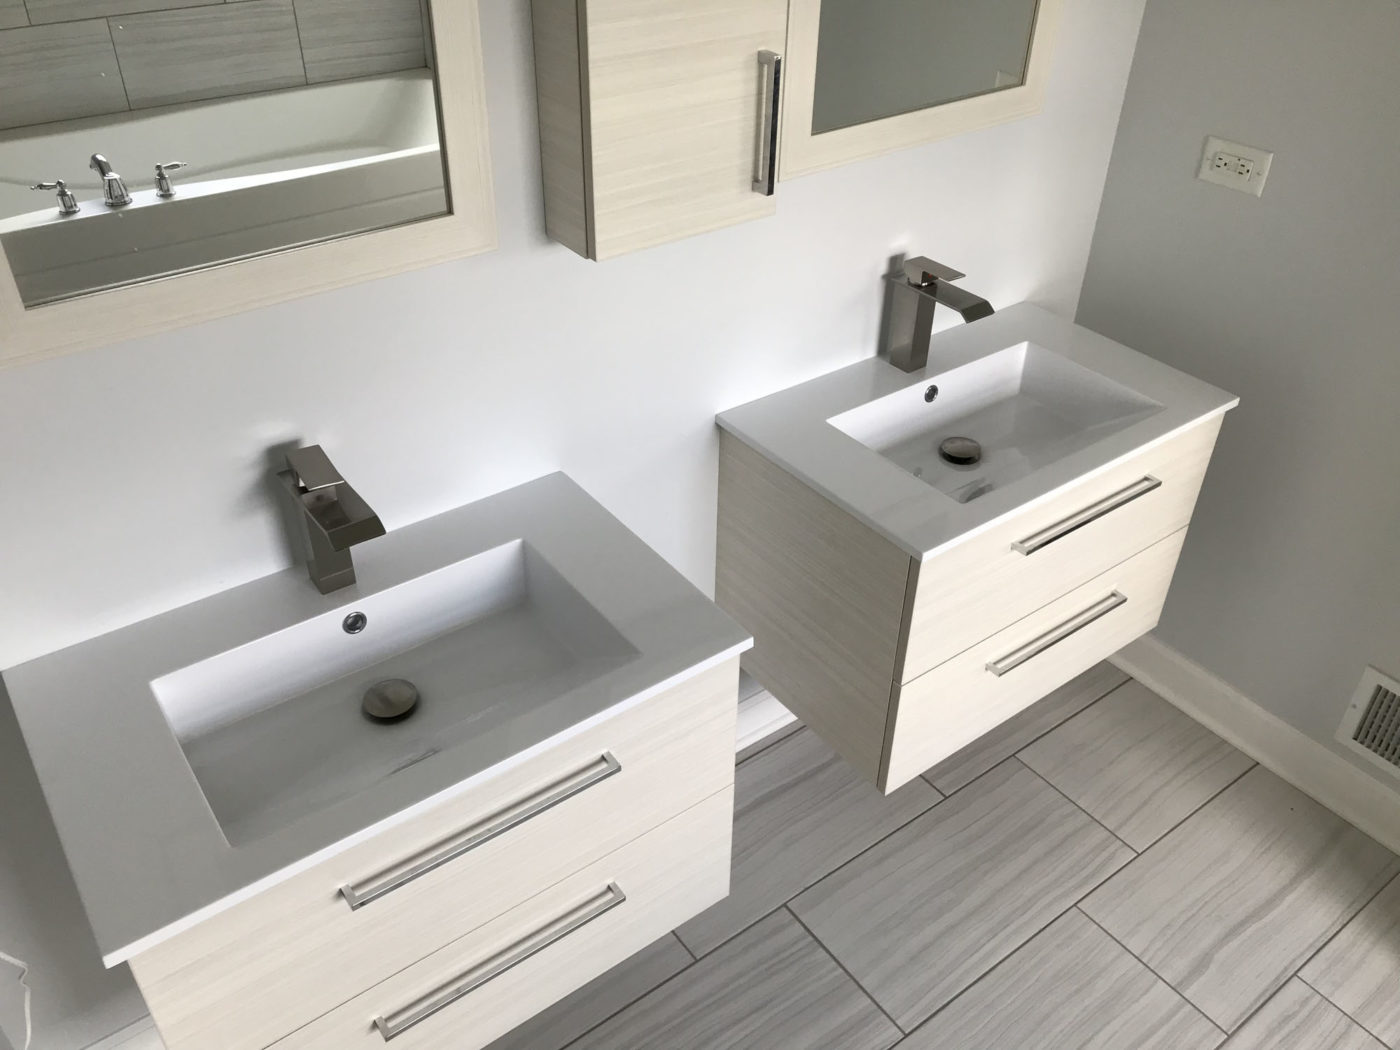 Bathroom Remodeling in Carpentersville - modern sinks recessed mirrors, new flooring